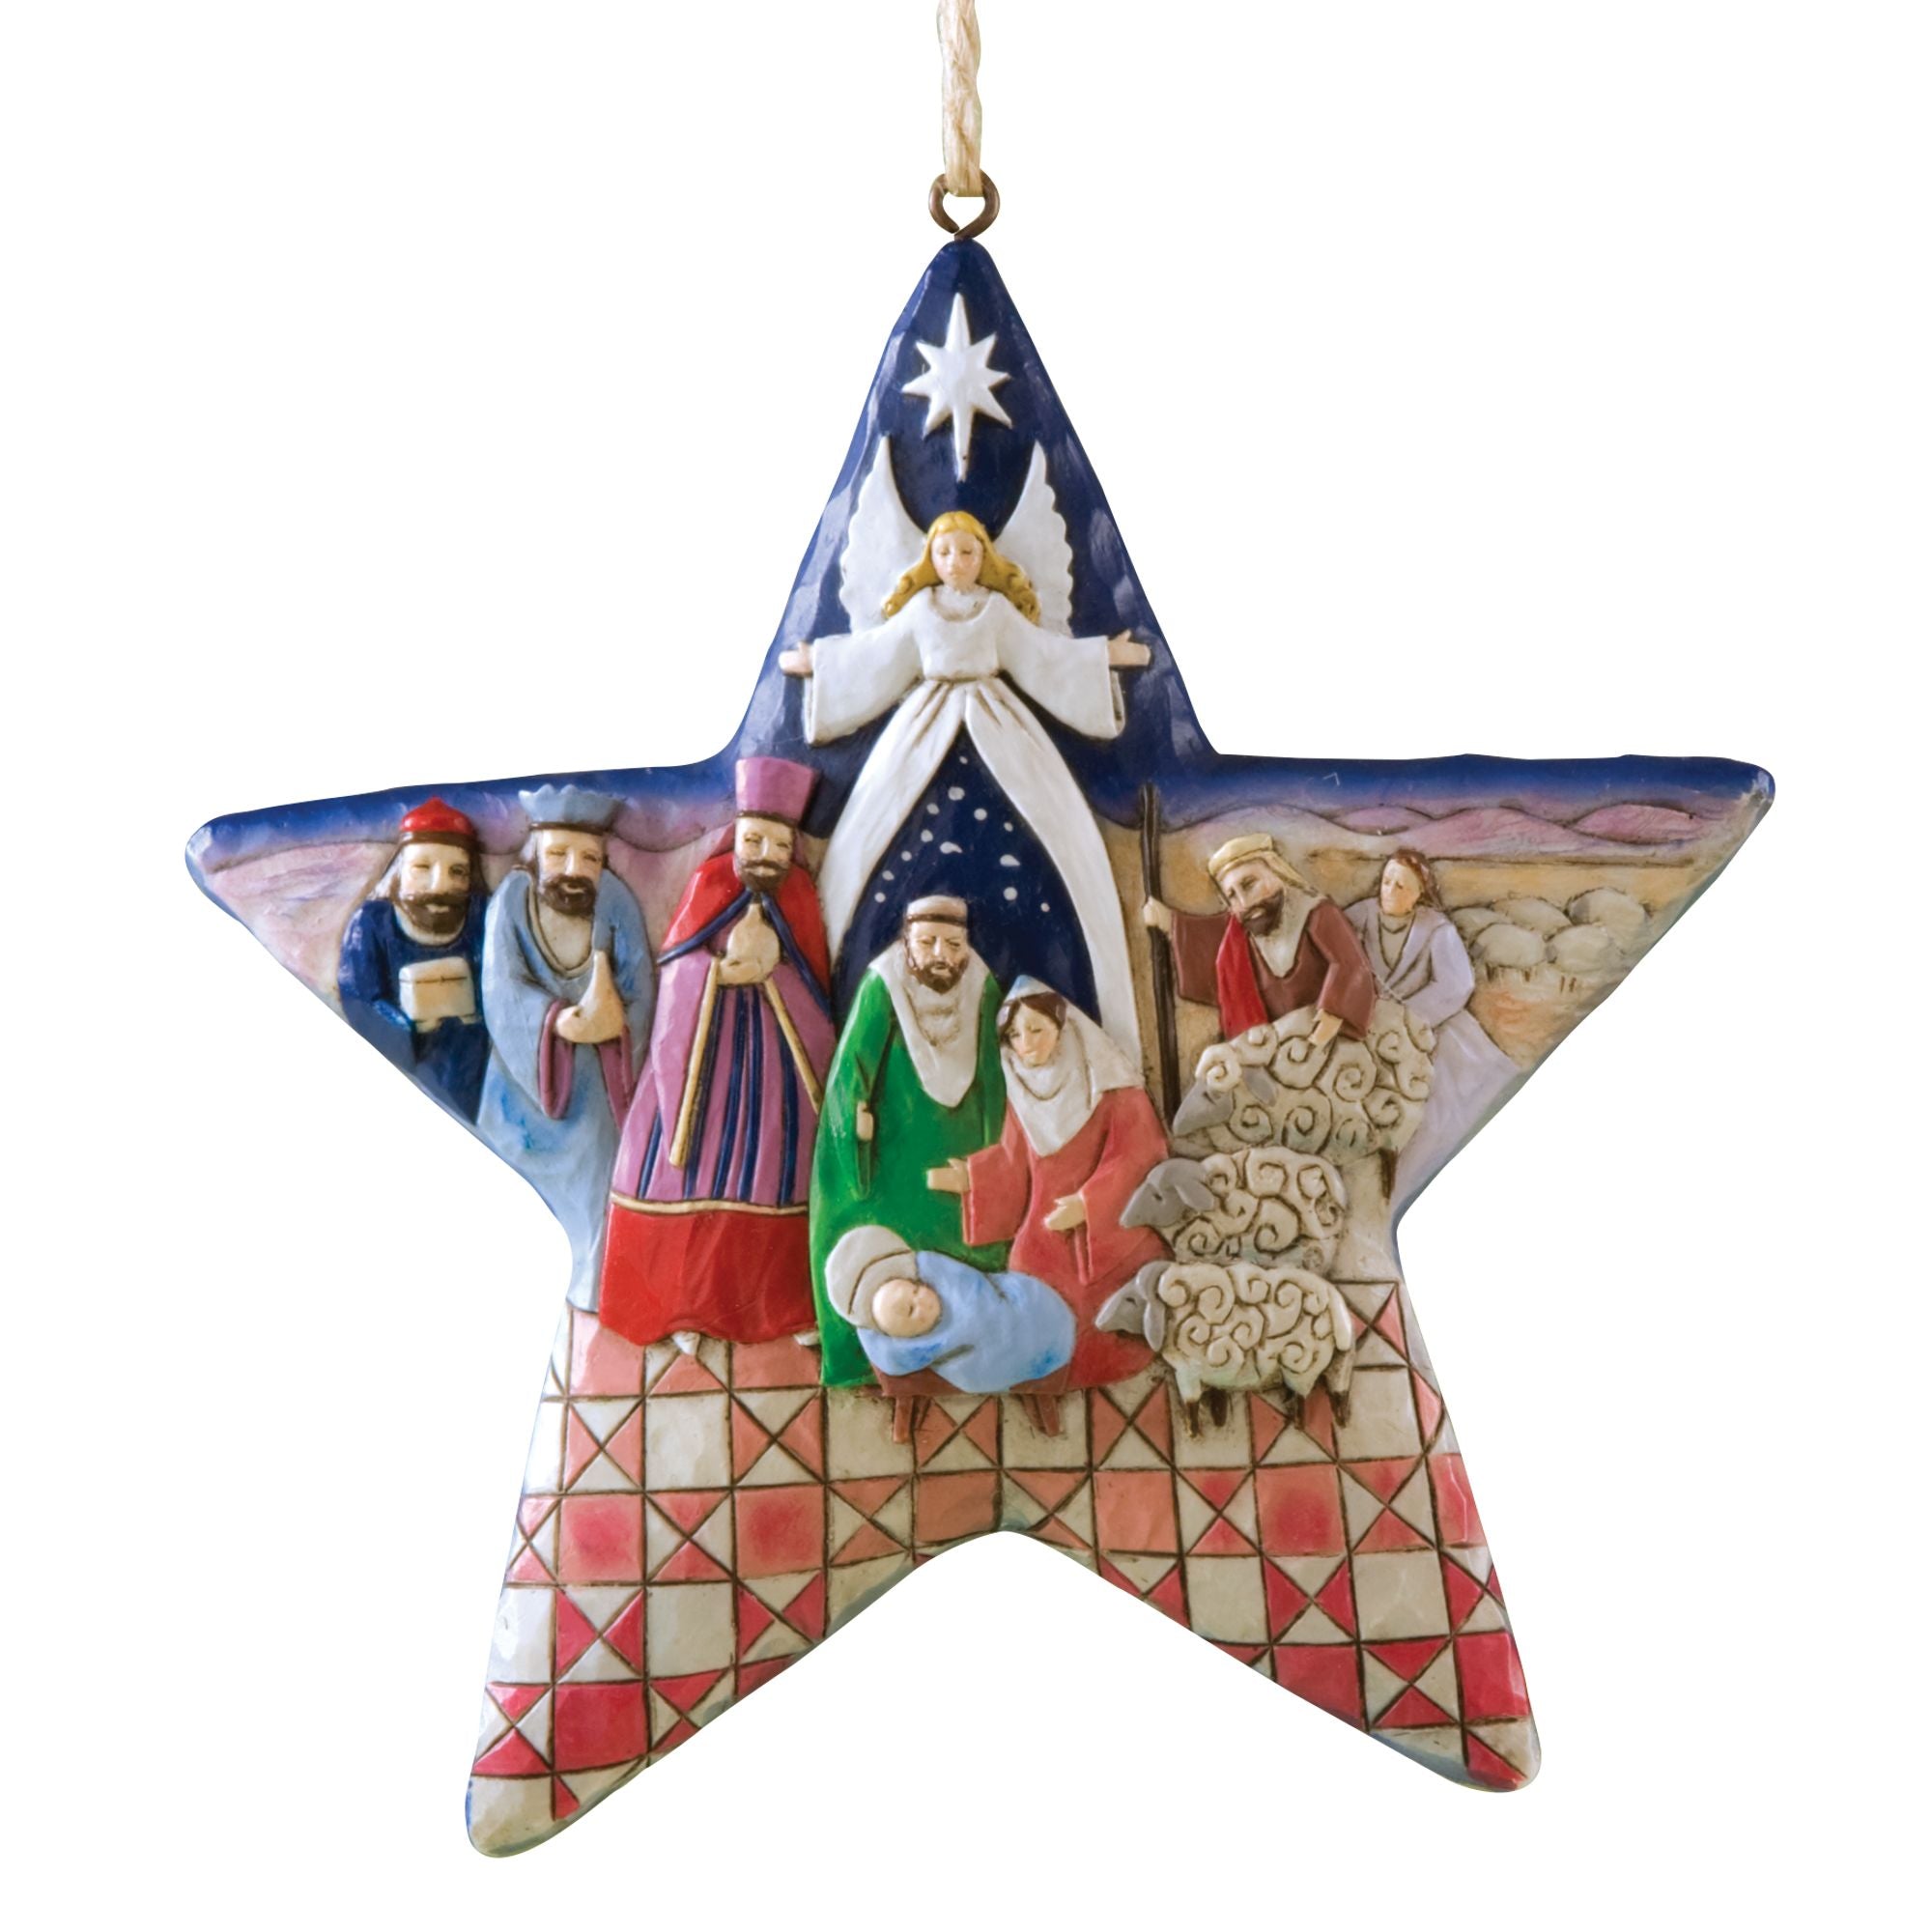 Nativity Star